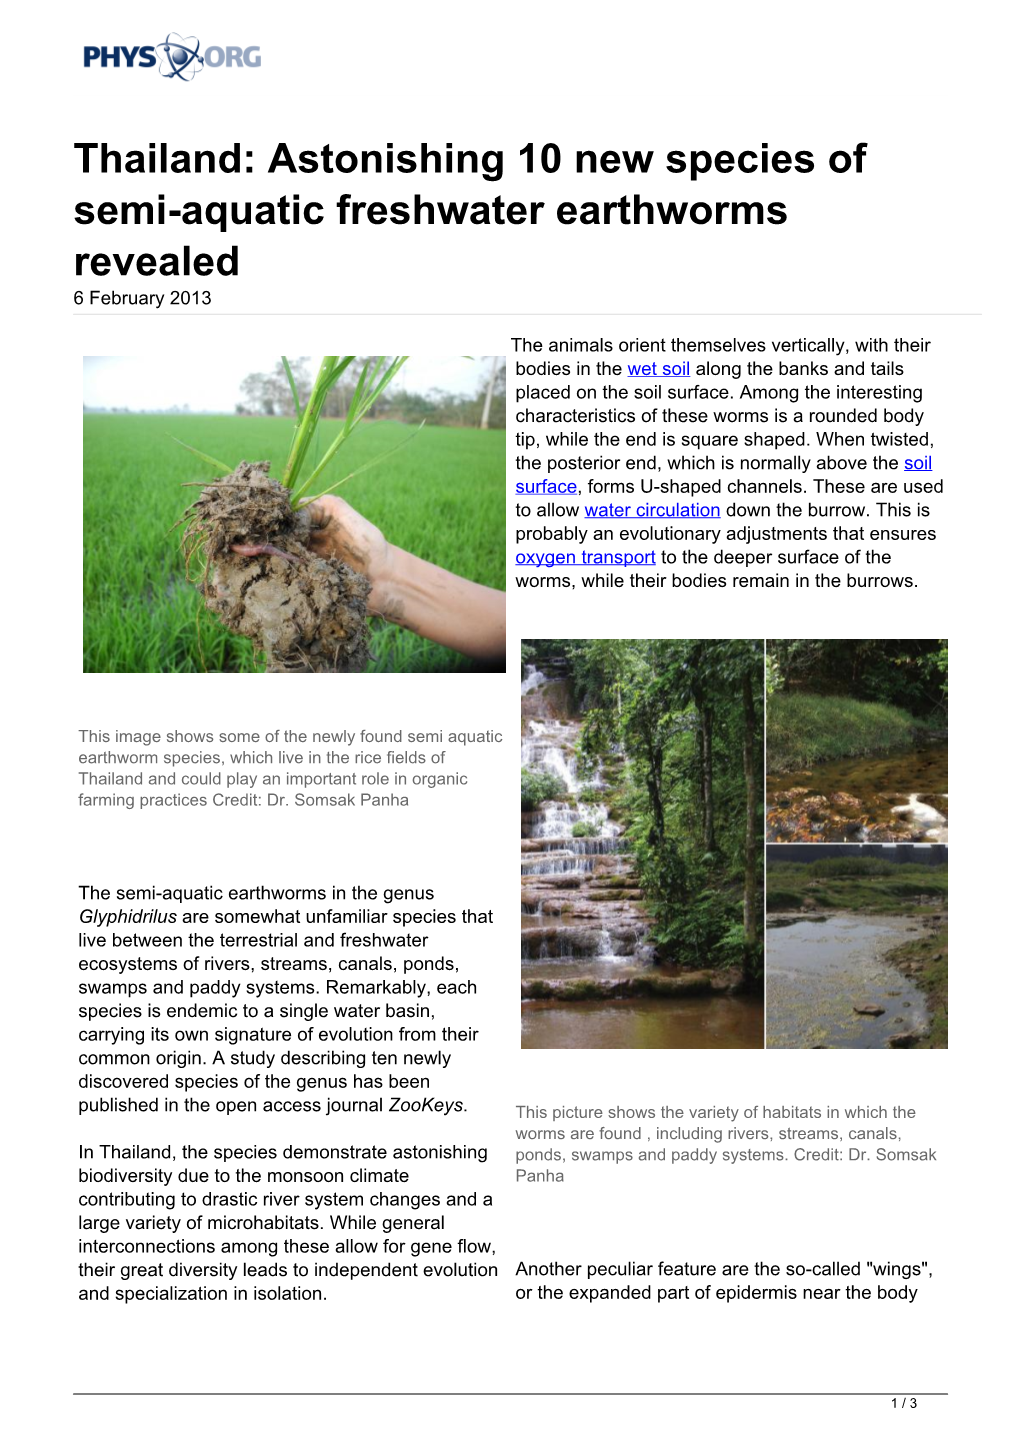 Thailand: Astonishing 10 New Species of Semi-Aquatic Freshwater Earthworms Revealed 6 February 2013